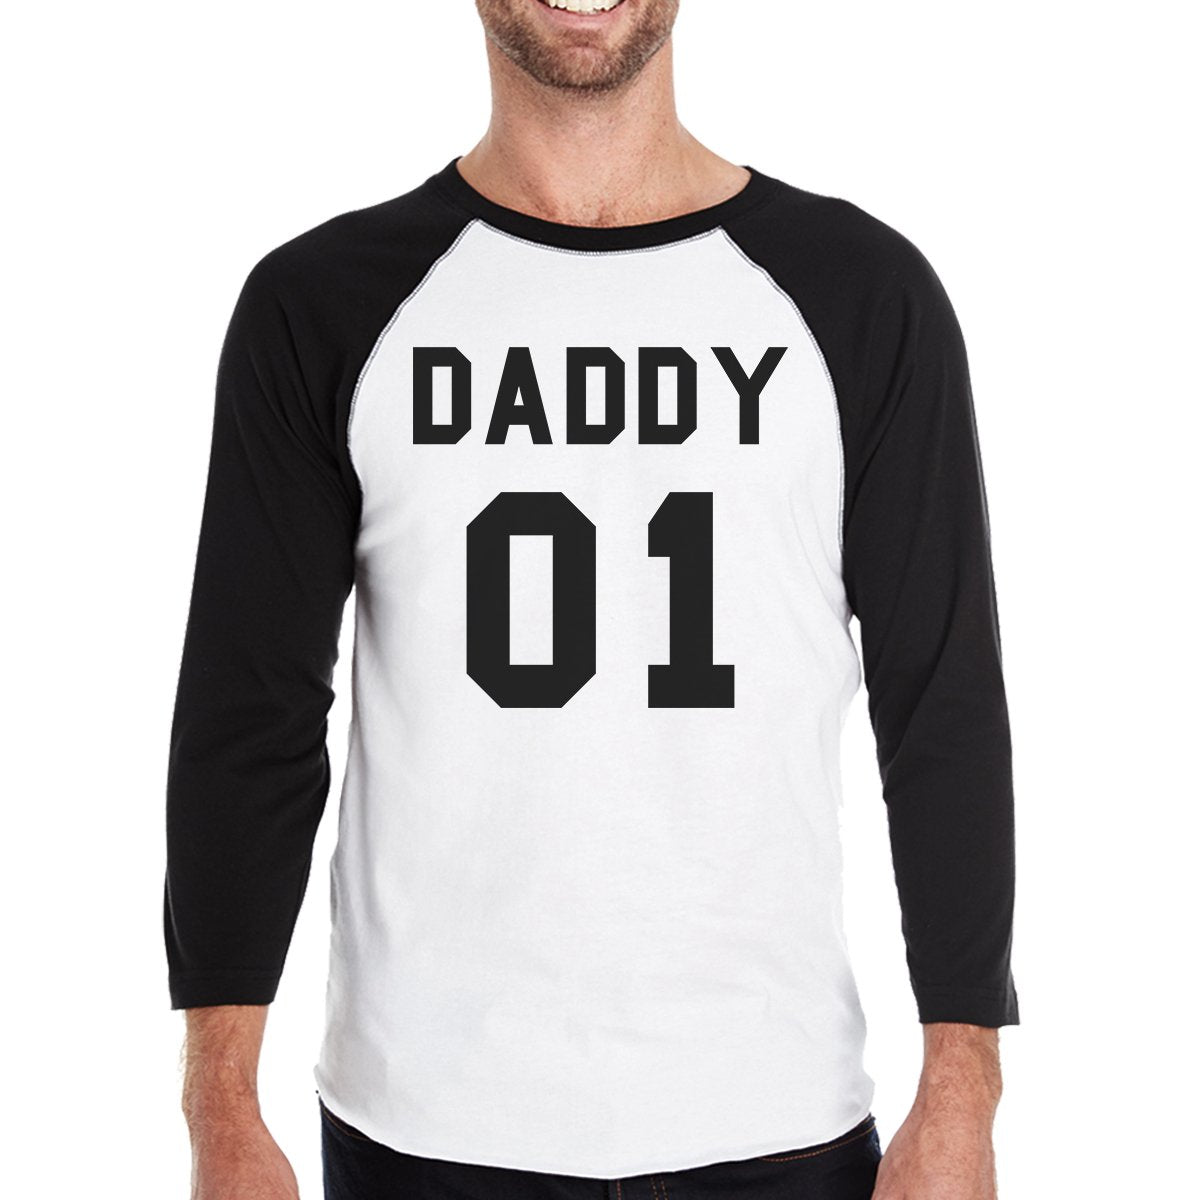 "Daddy 01" Men's Black Baseball Shirt